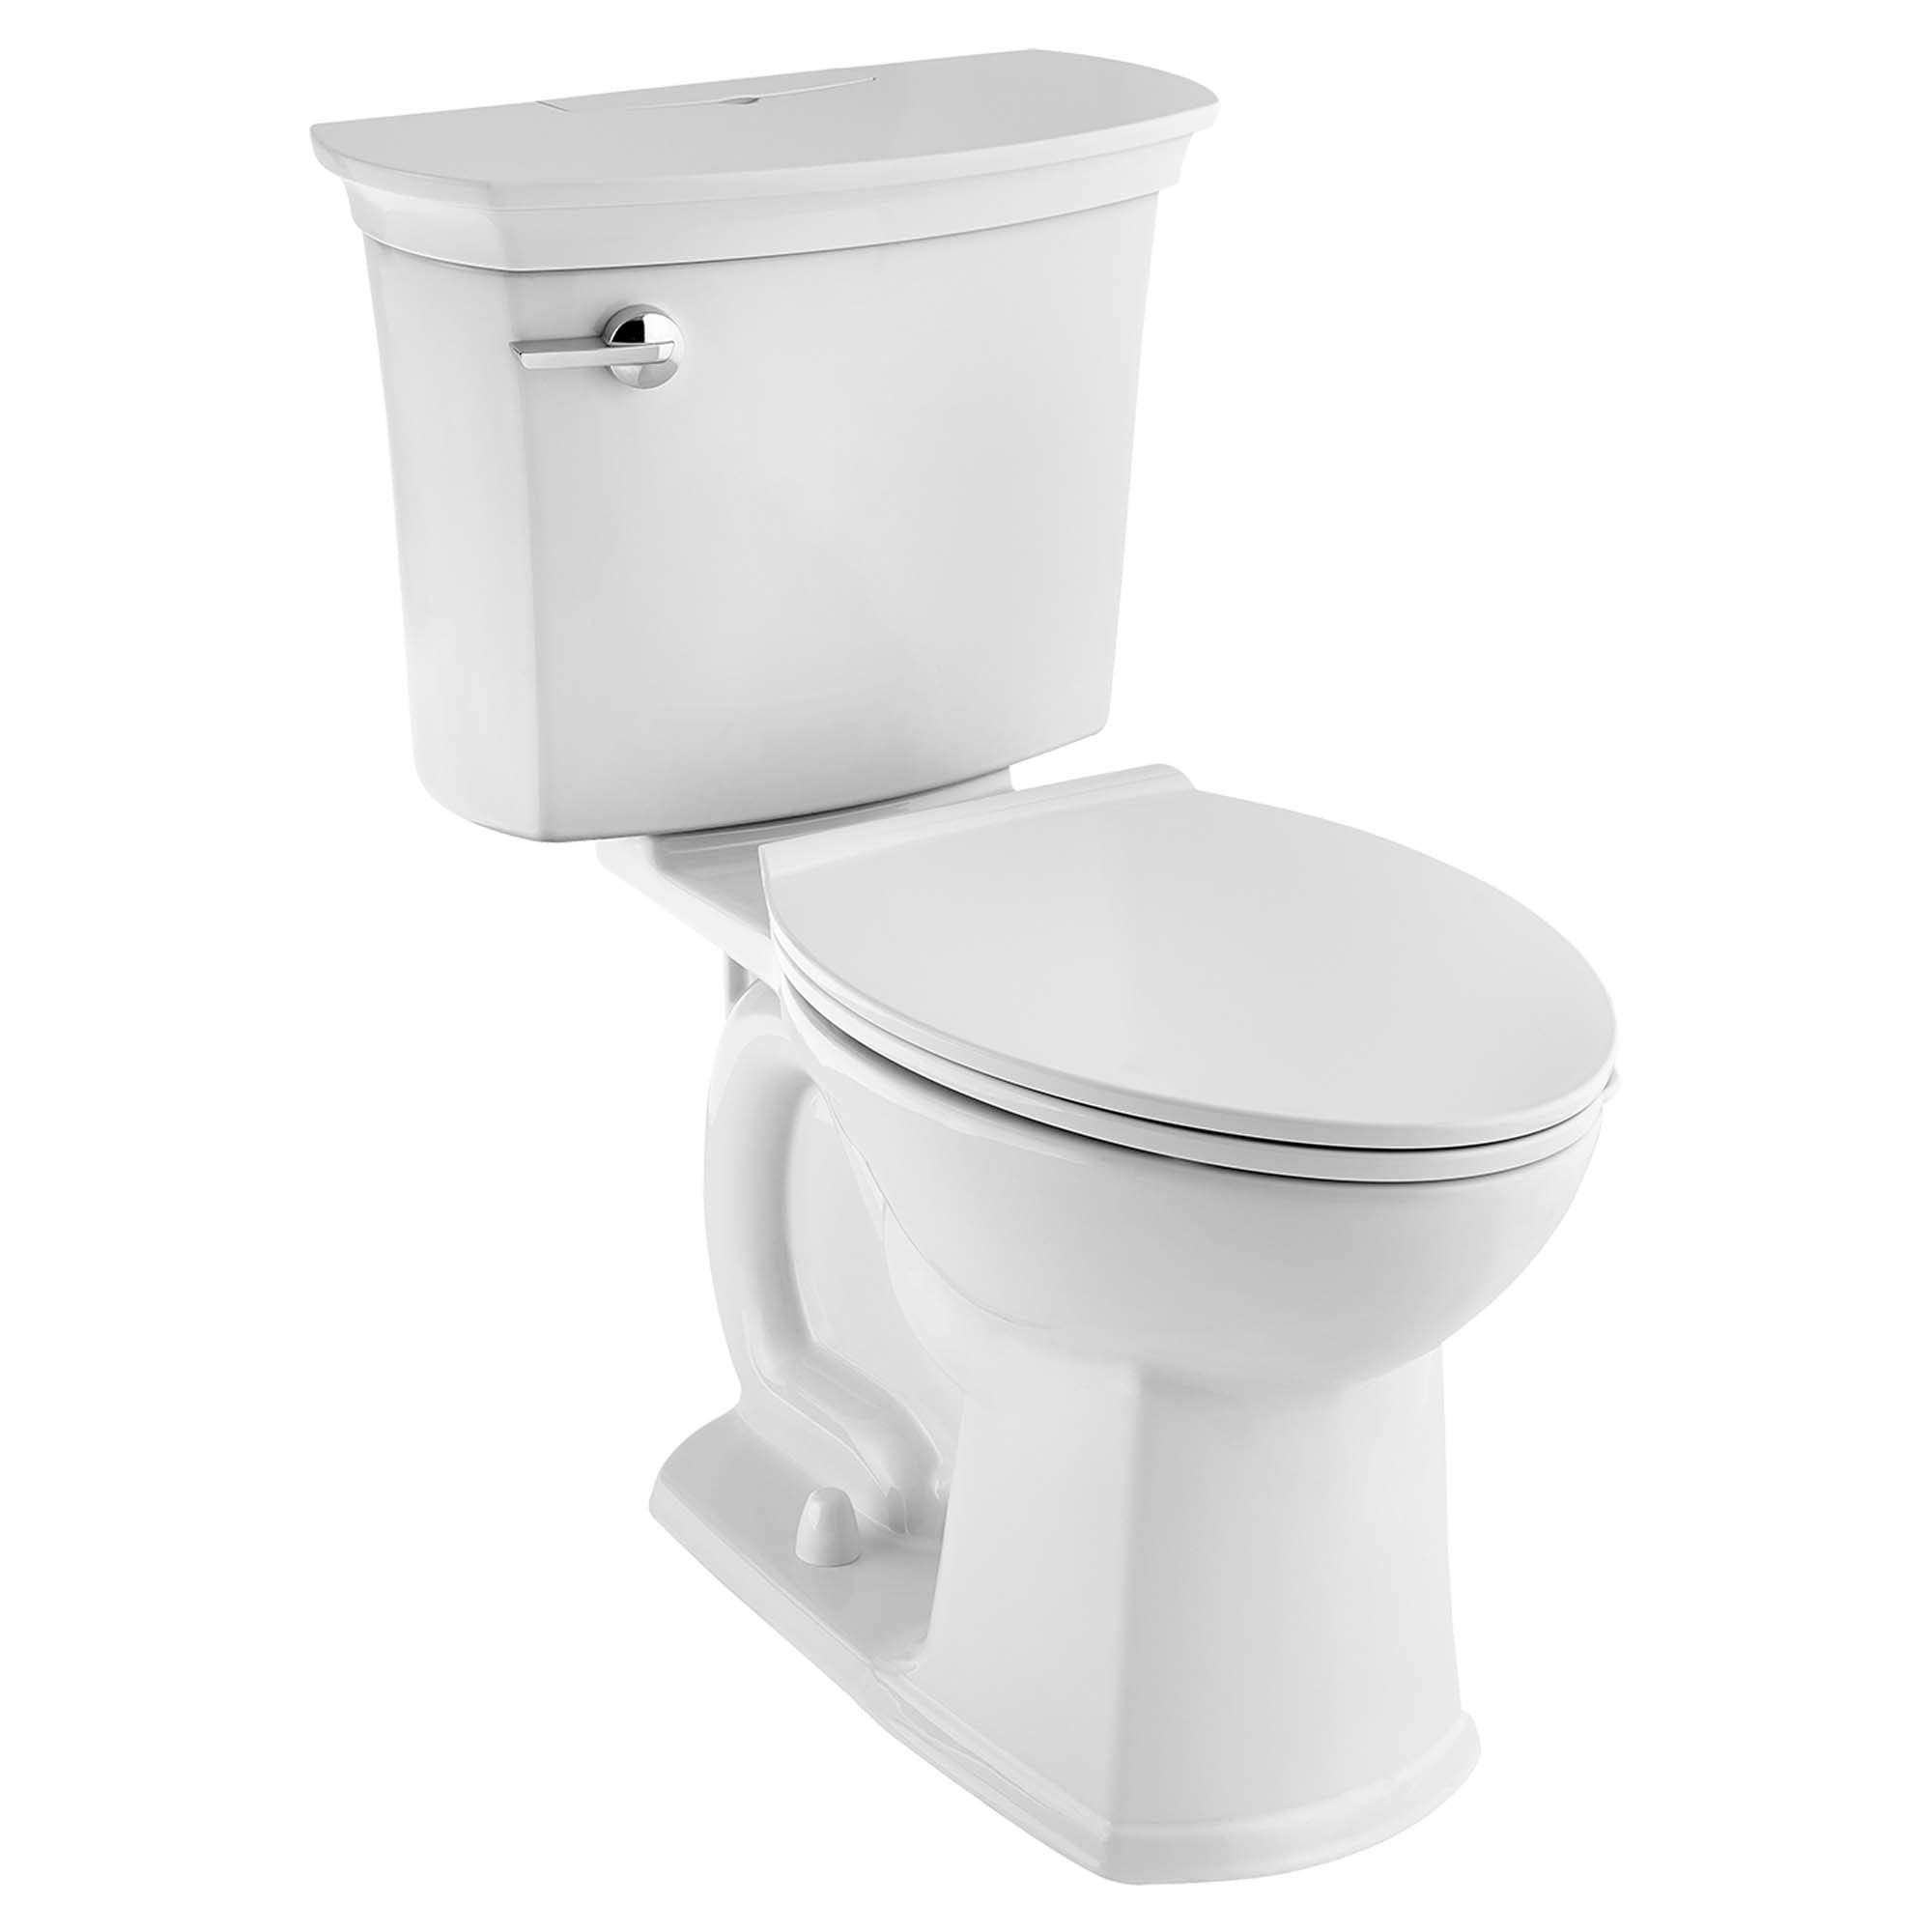 Tapa wc higiene íntima Ideal Standard, Ecco adaptable. Limpieza total